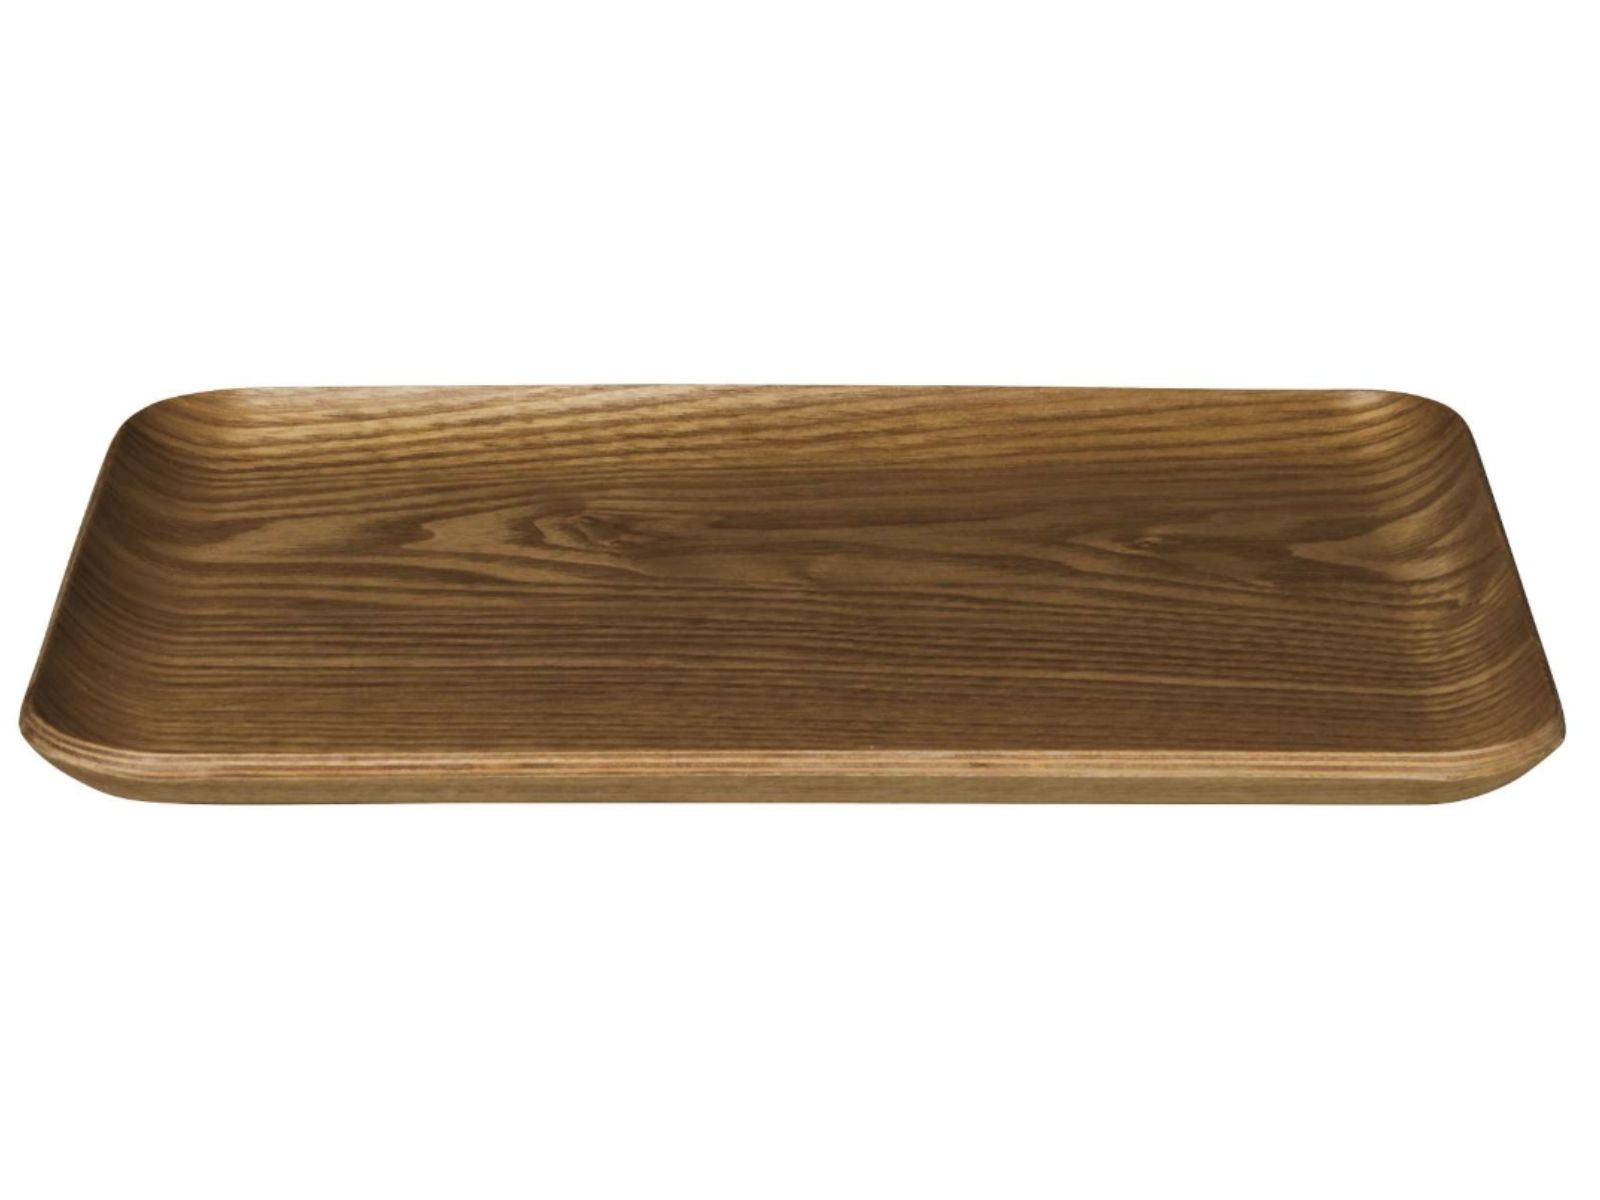 ASA Holztablett rechteckig wood 27 x 20 cm